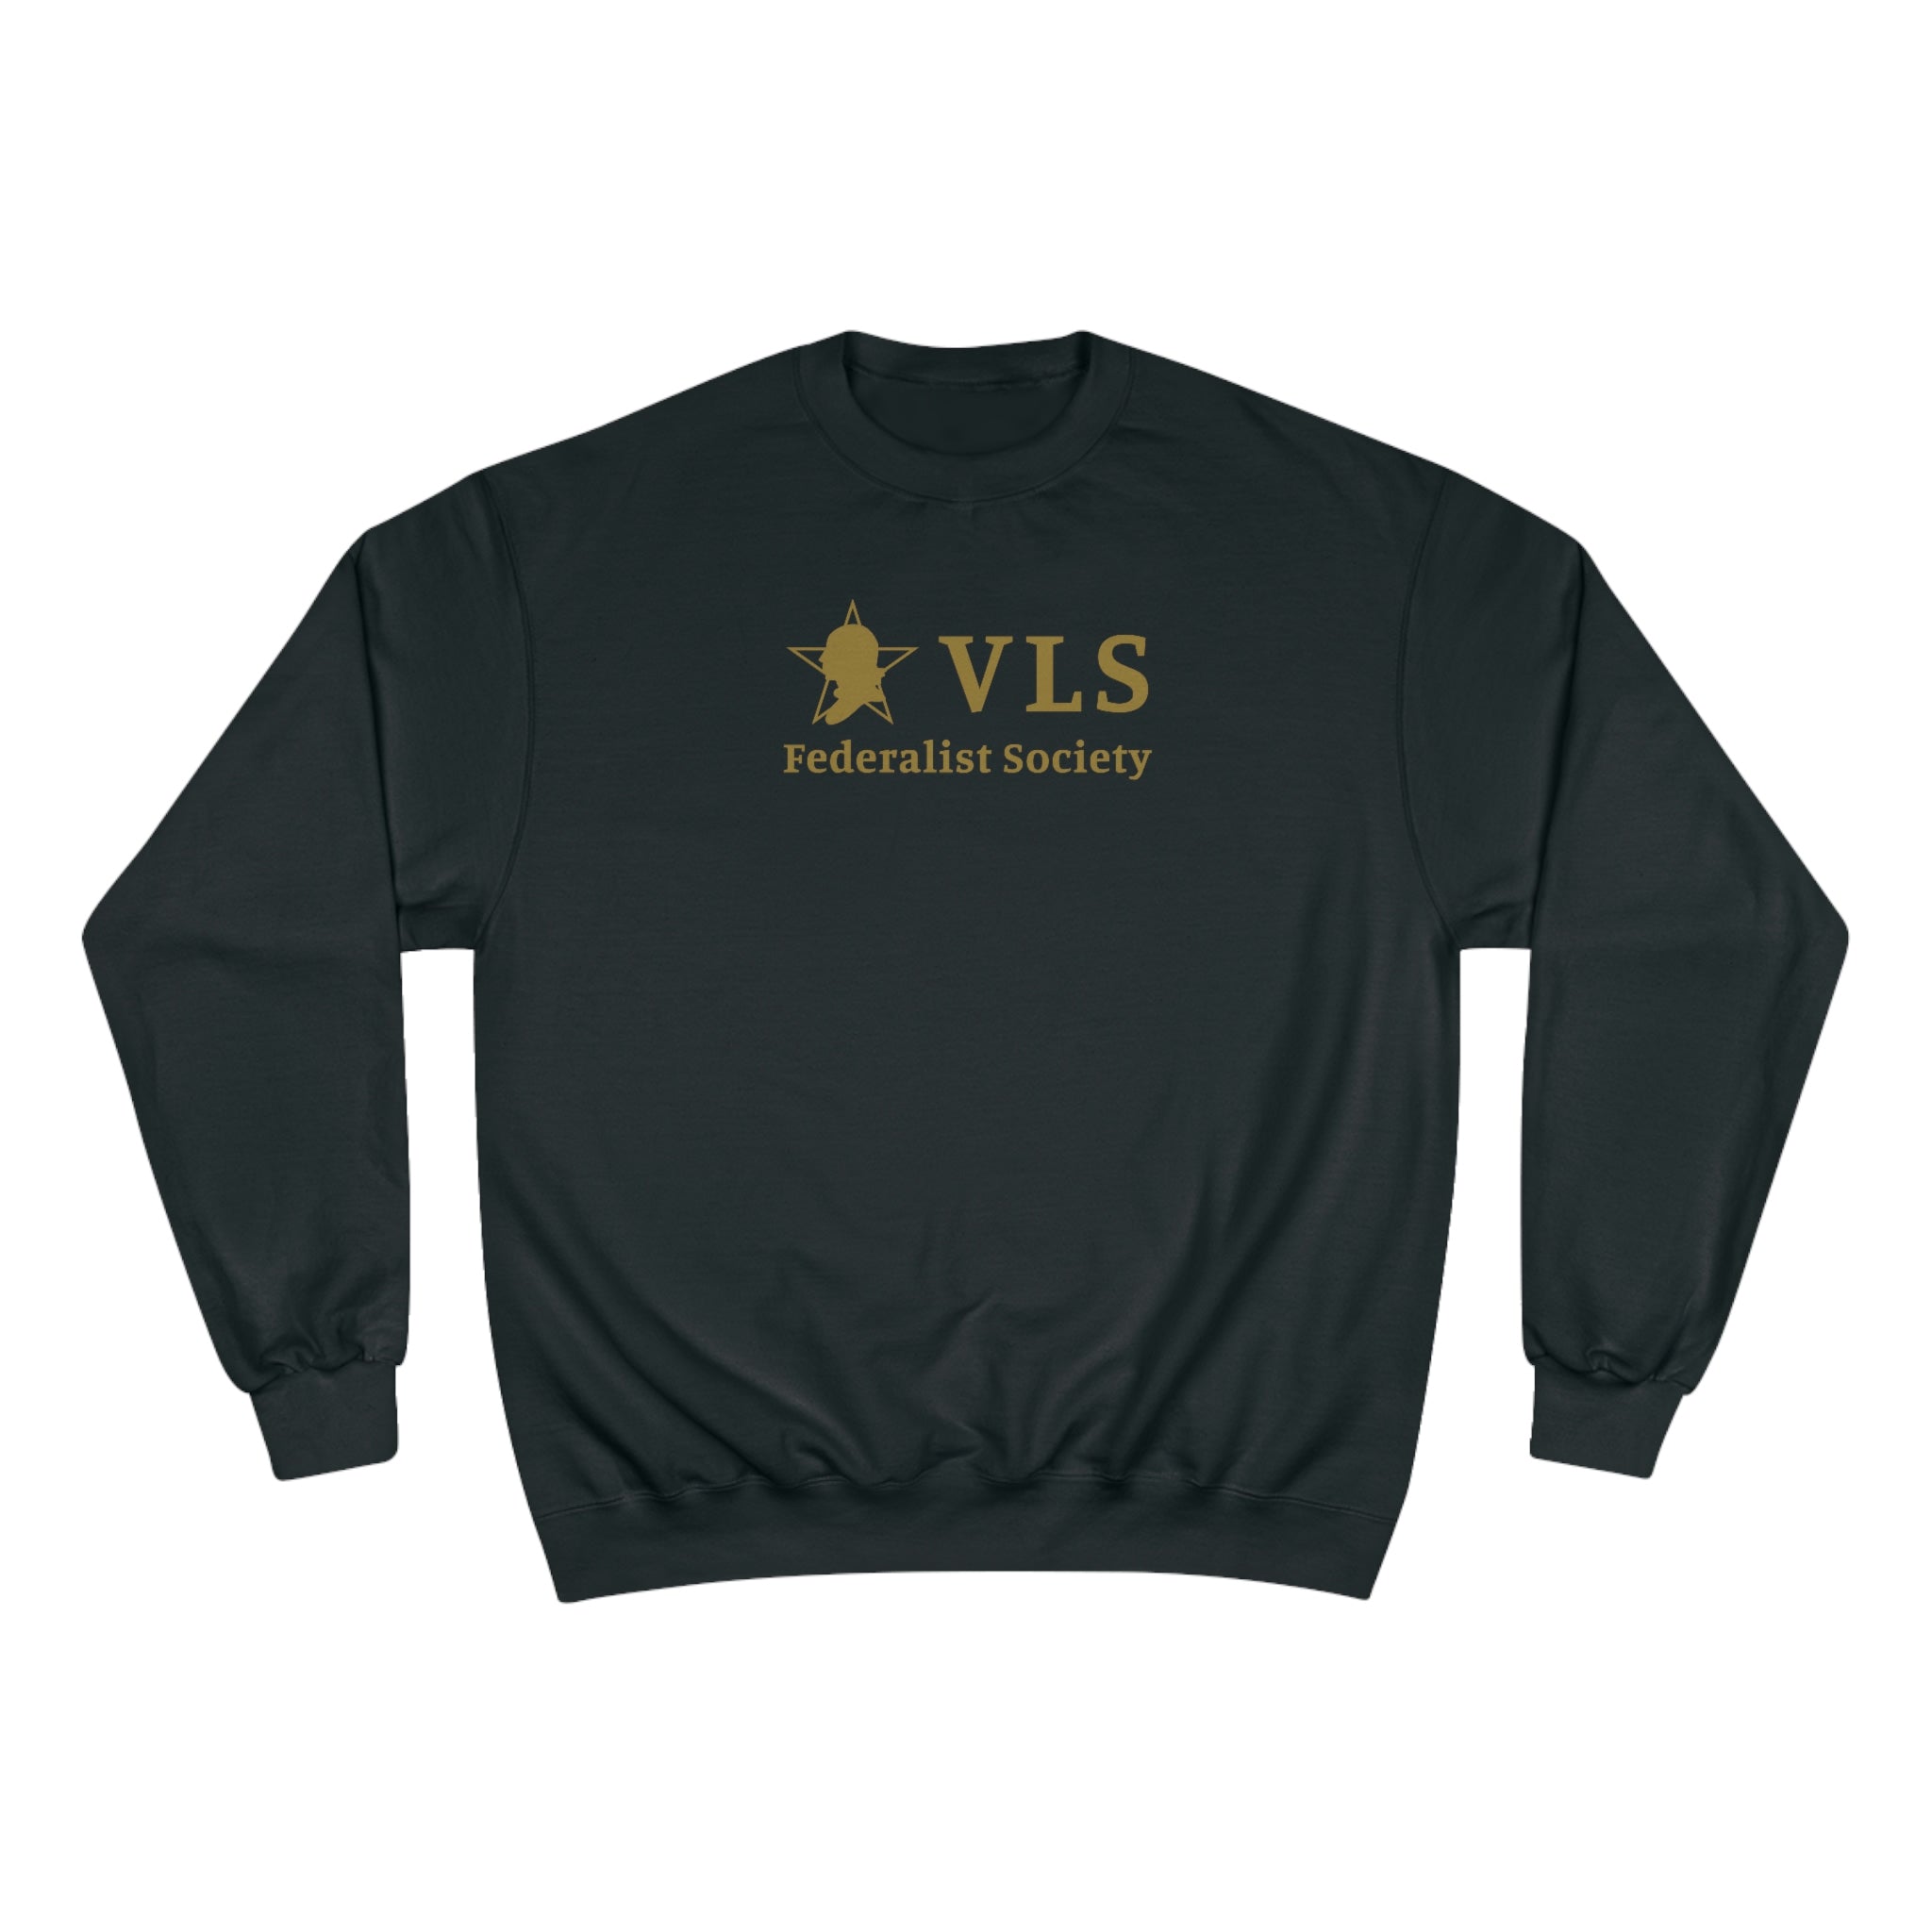 Champion Sweatshirt (VLS Federalist Society)